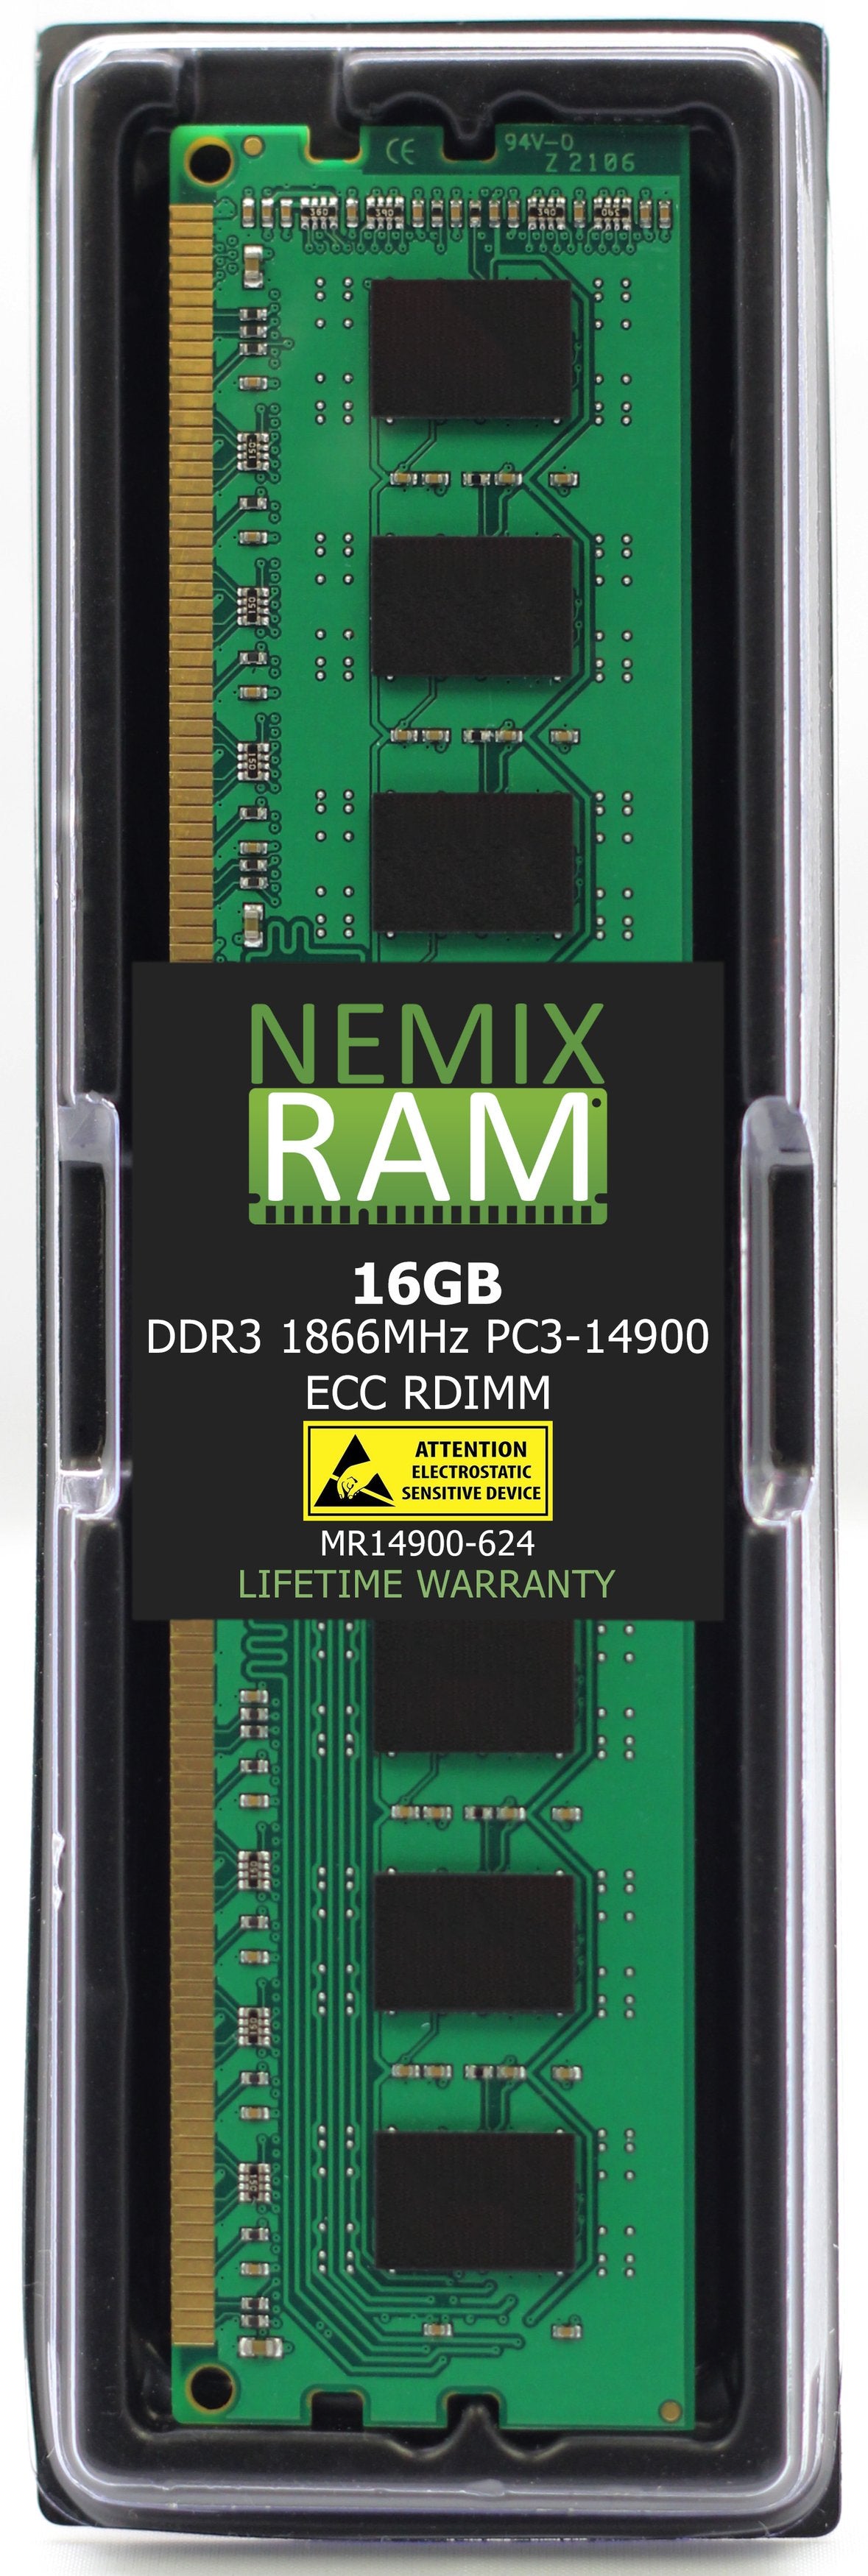 16GB DDR3 1866MHZ PC3-14900 RDIMM Compatible with SUPERMICRO MEM-DR316L-HL02-ER18